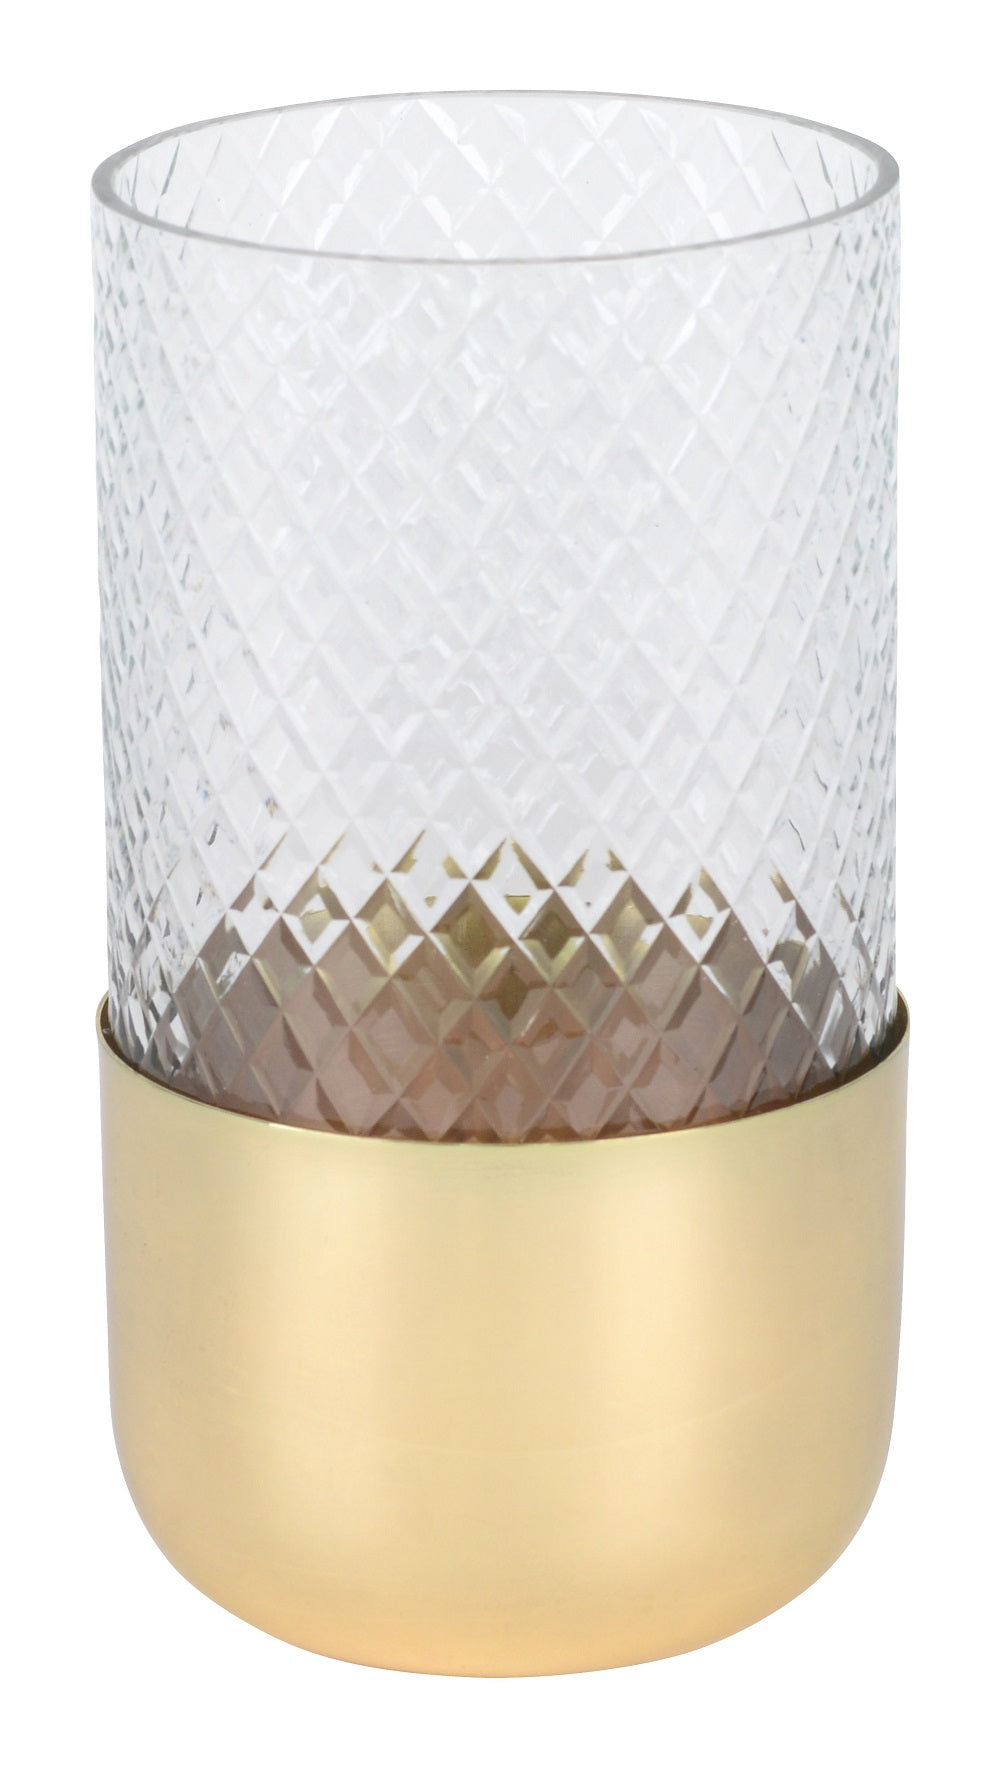 Windlicht klar/gold Vase Marylebone 19cm Glas/Metall Deko